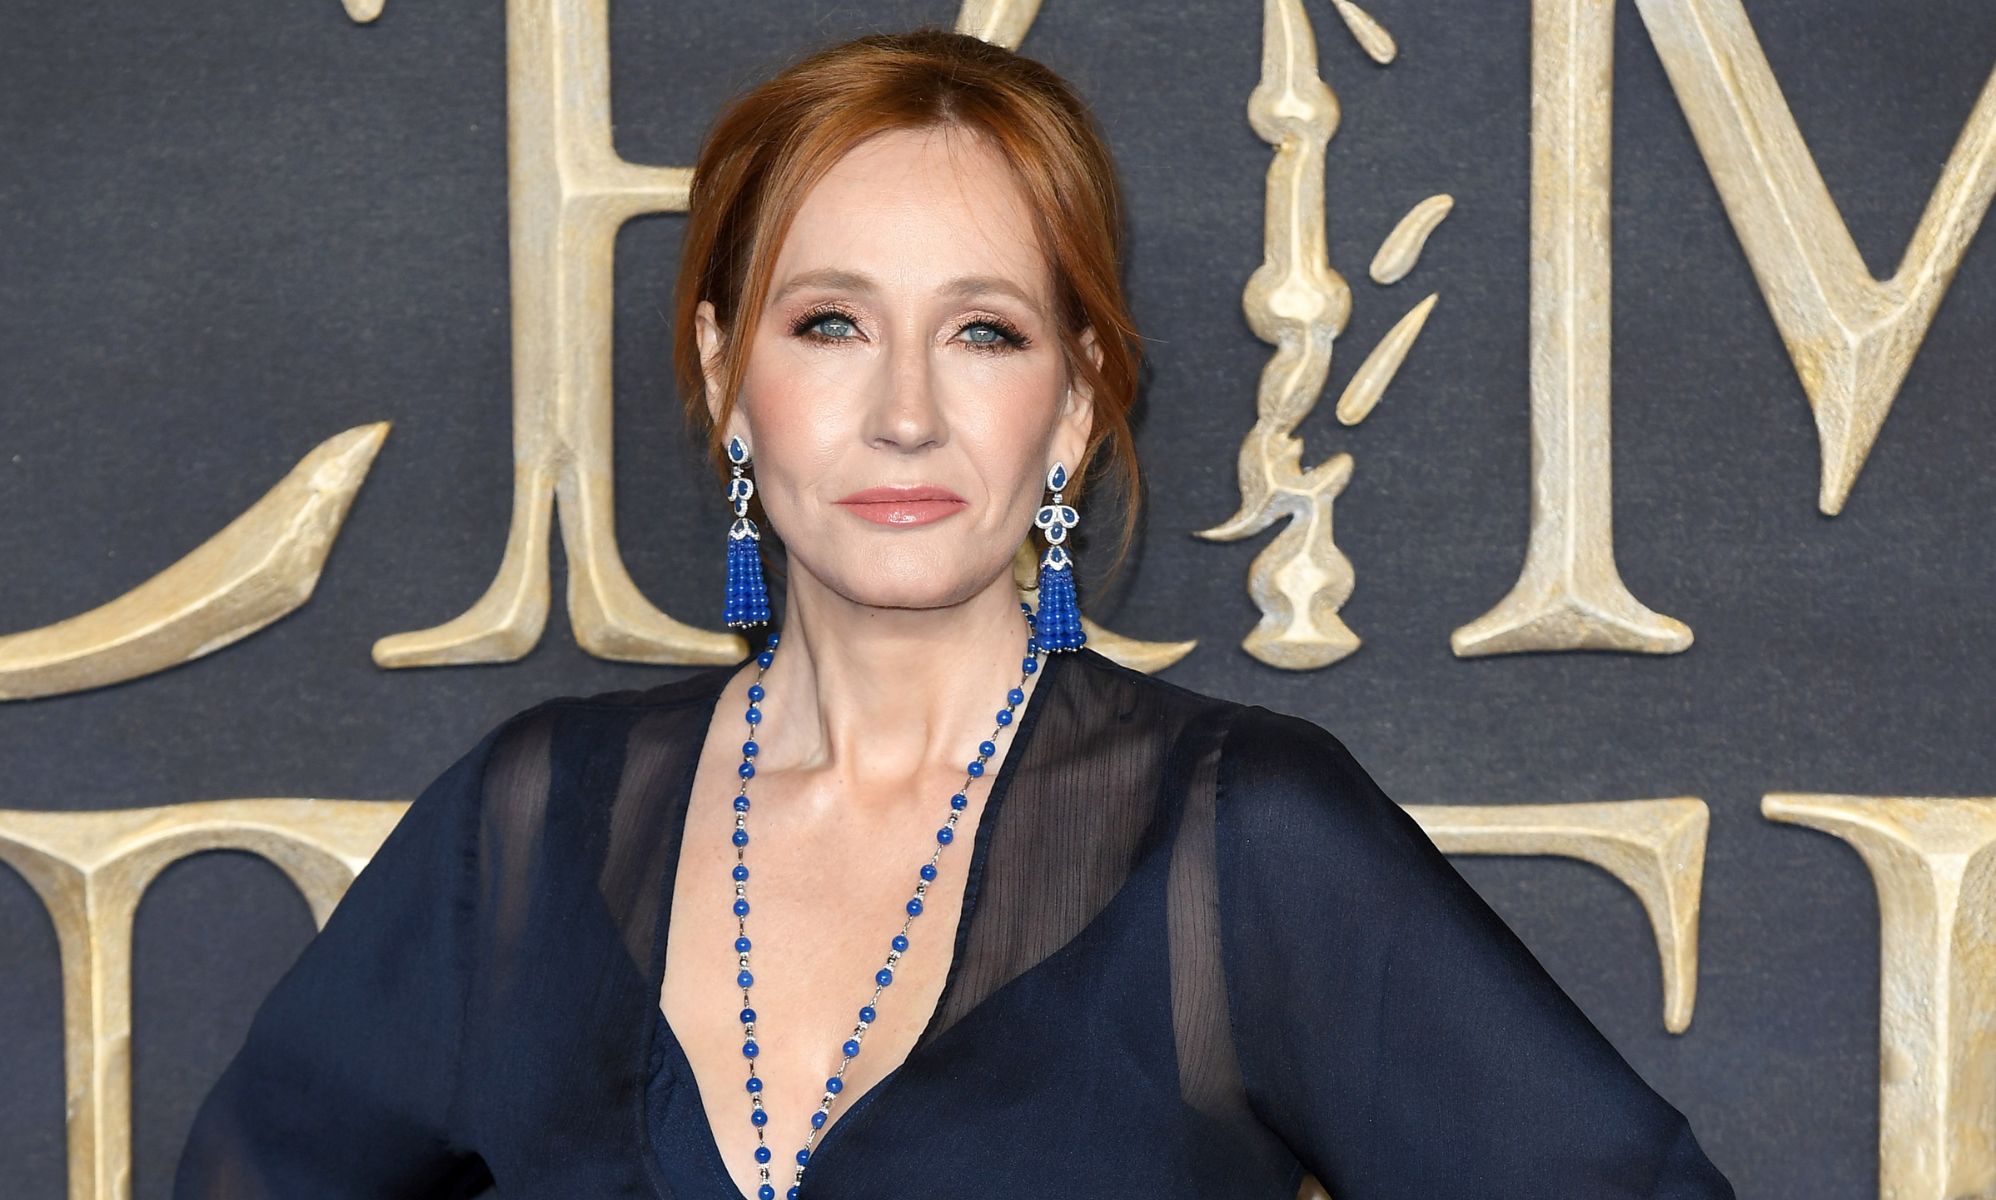 Martina Navratilova, Judy Murray endorse JK Rowling trans post